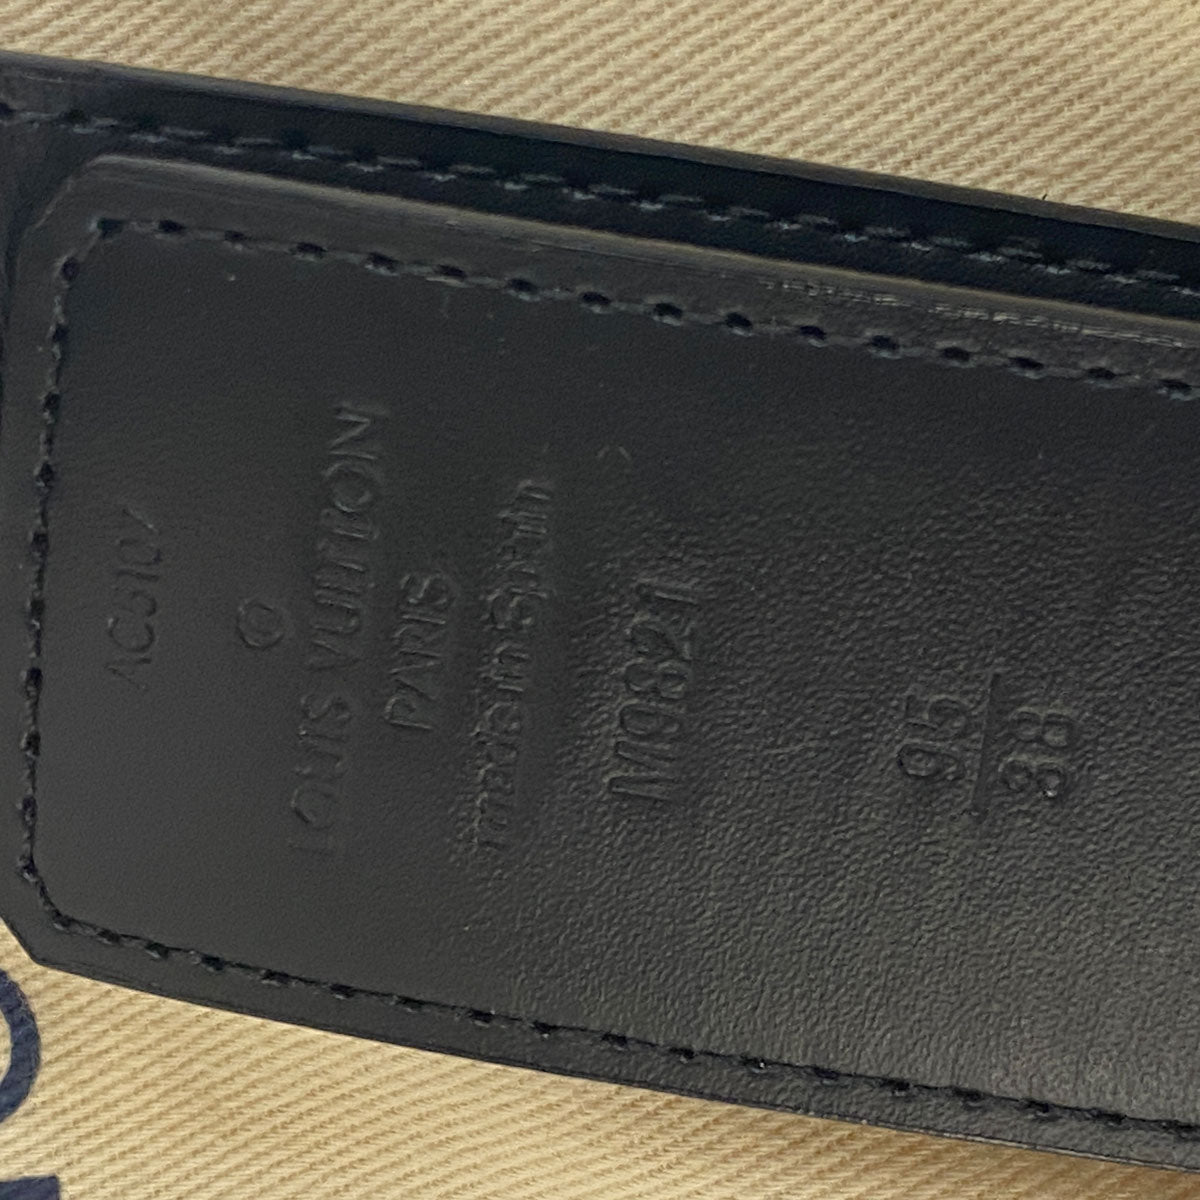 Louis Vuitton Monogram Initiales 40mm Reversible Belt – Chicago